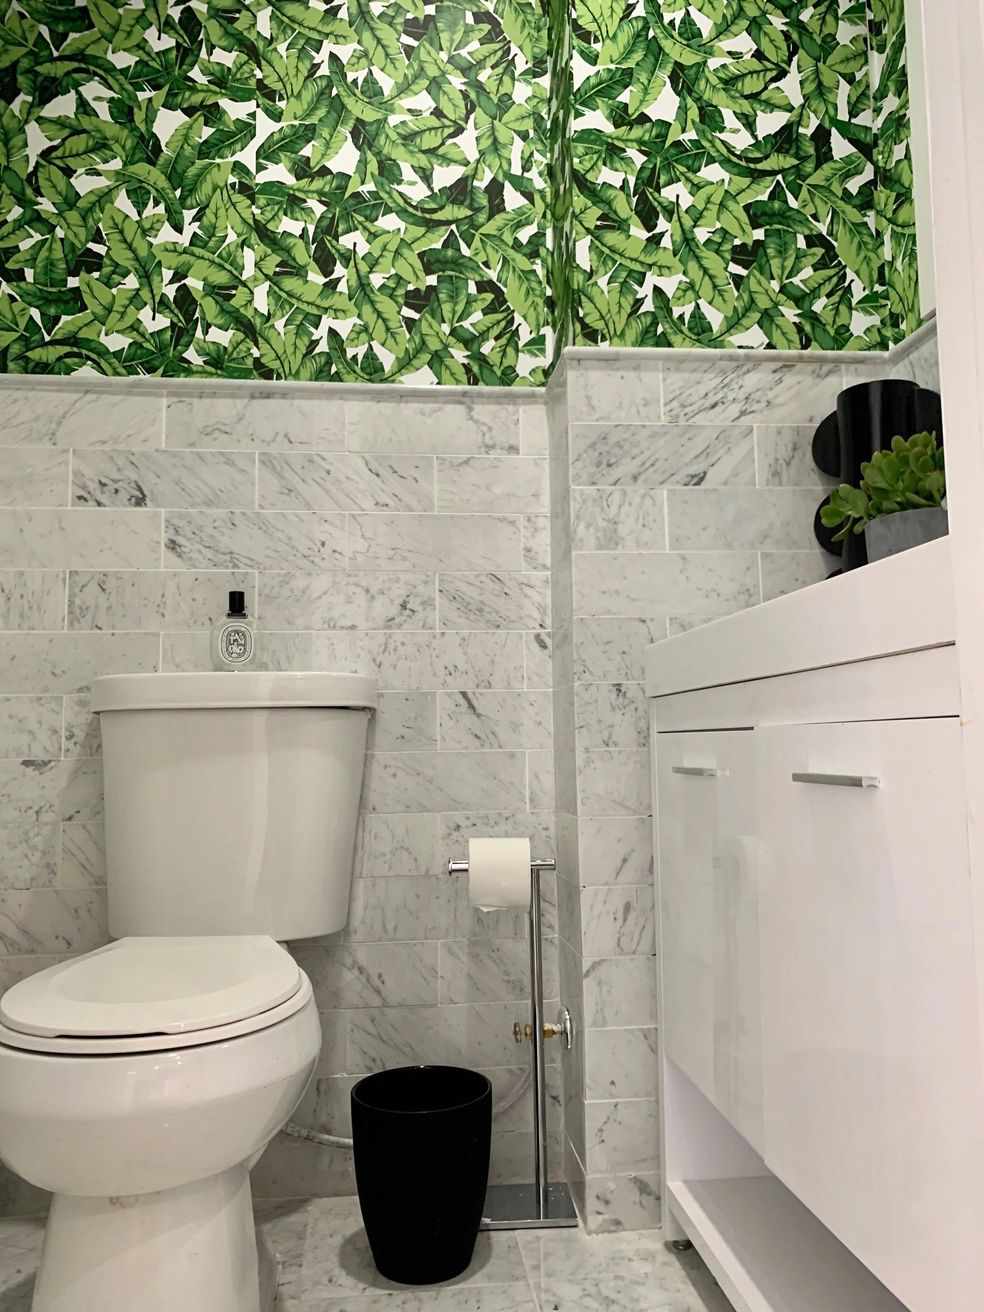 Papier peint salle de bain feuille de bananier